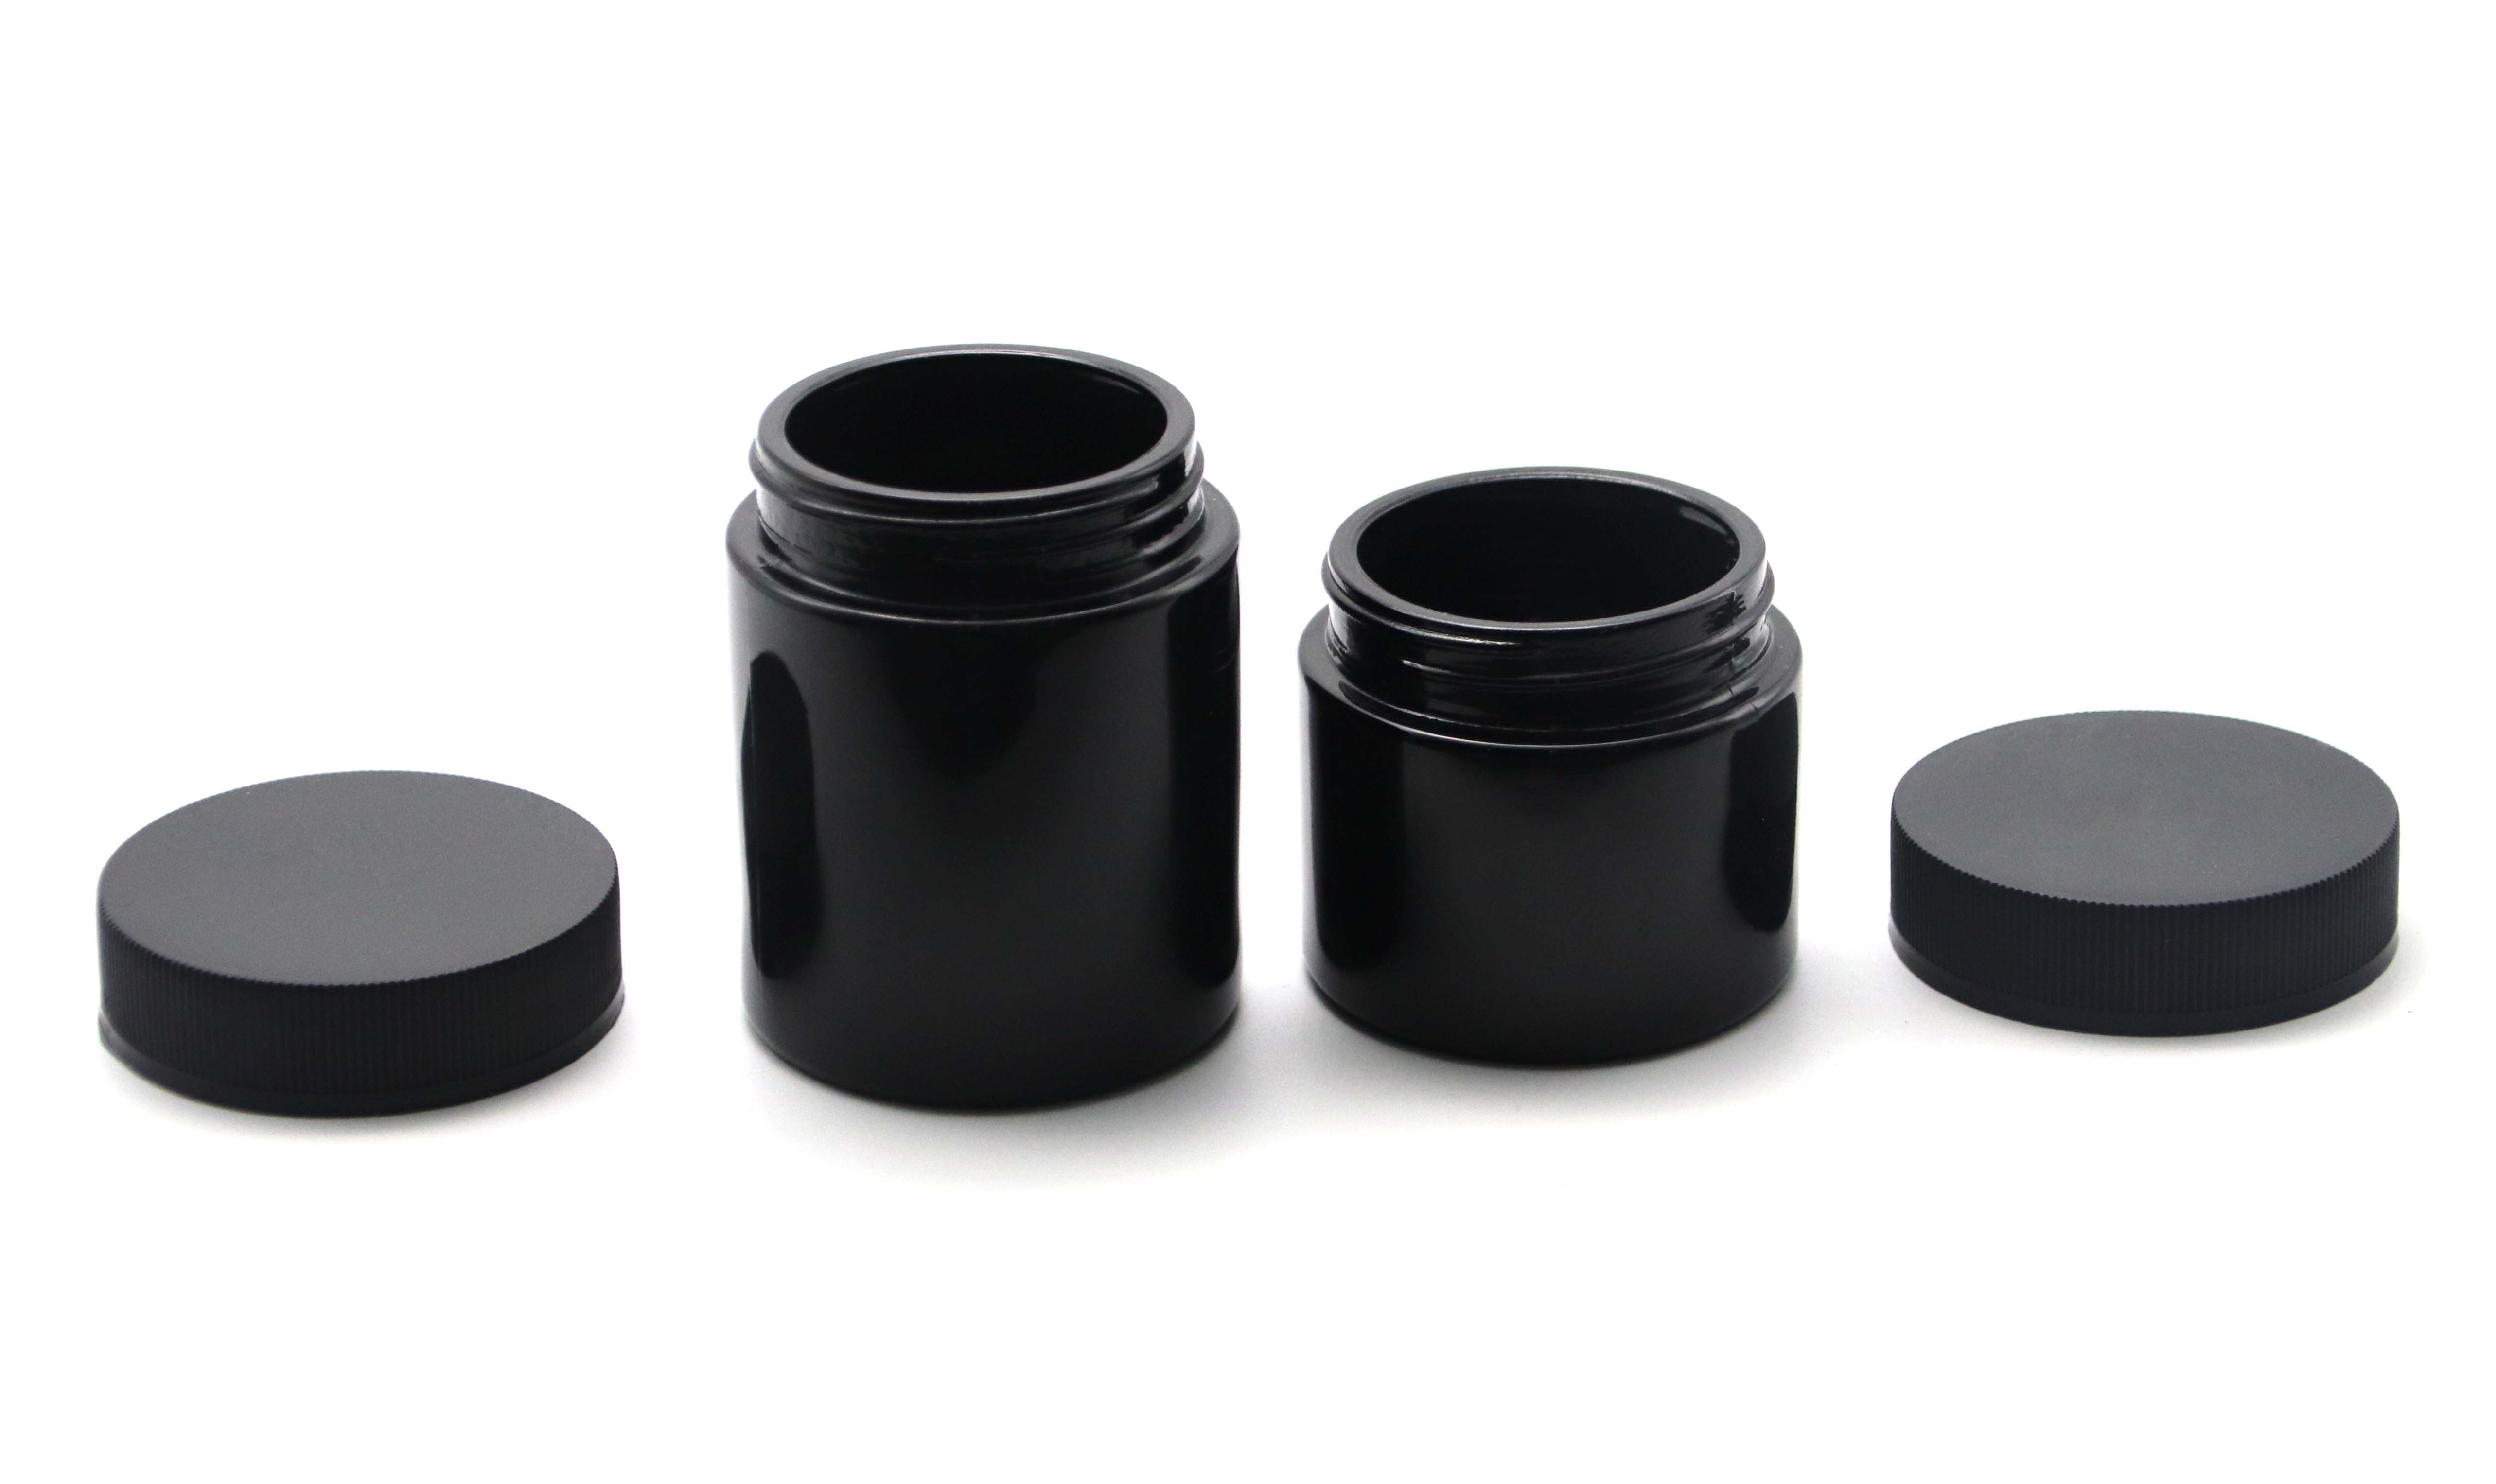 2oz black Child Resistant Glass Jar - 420 Canna Pack